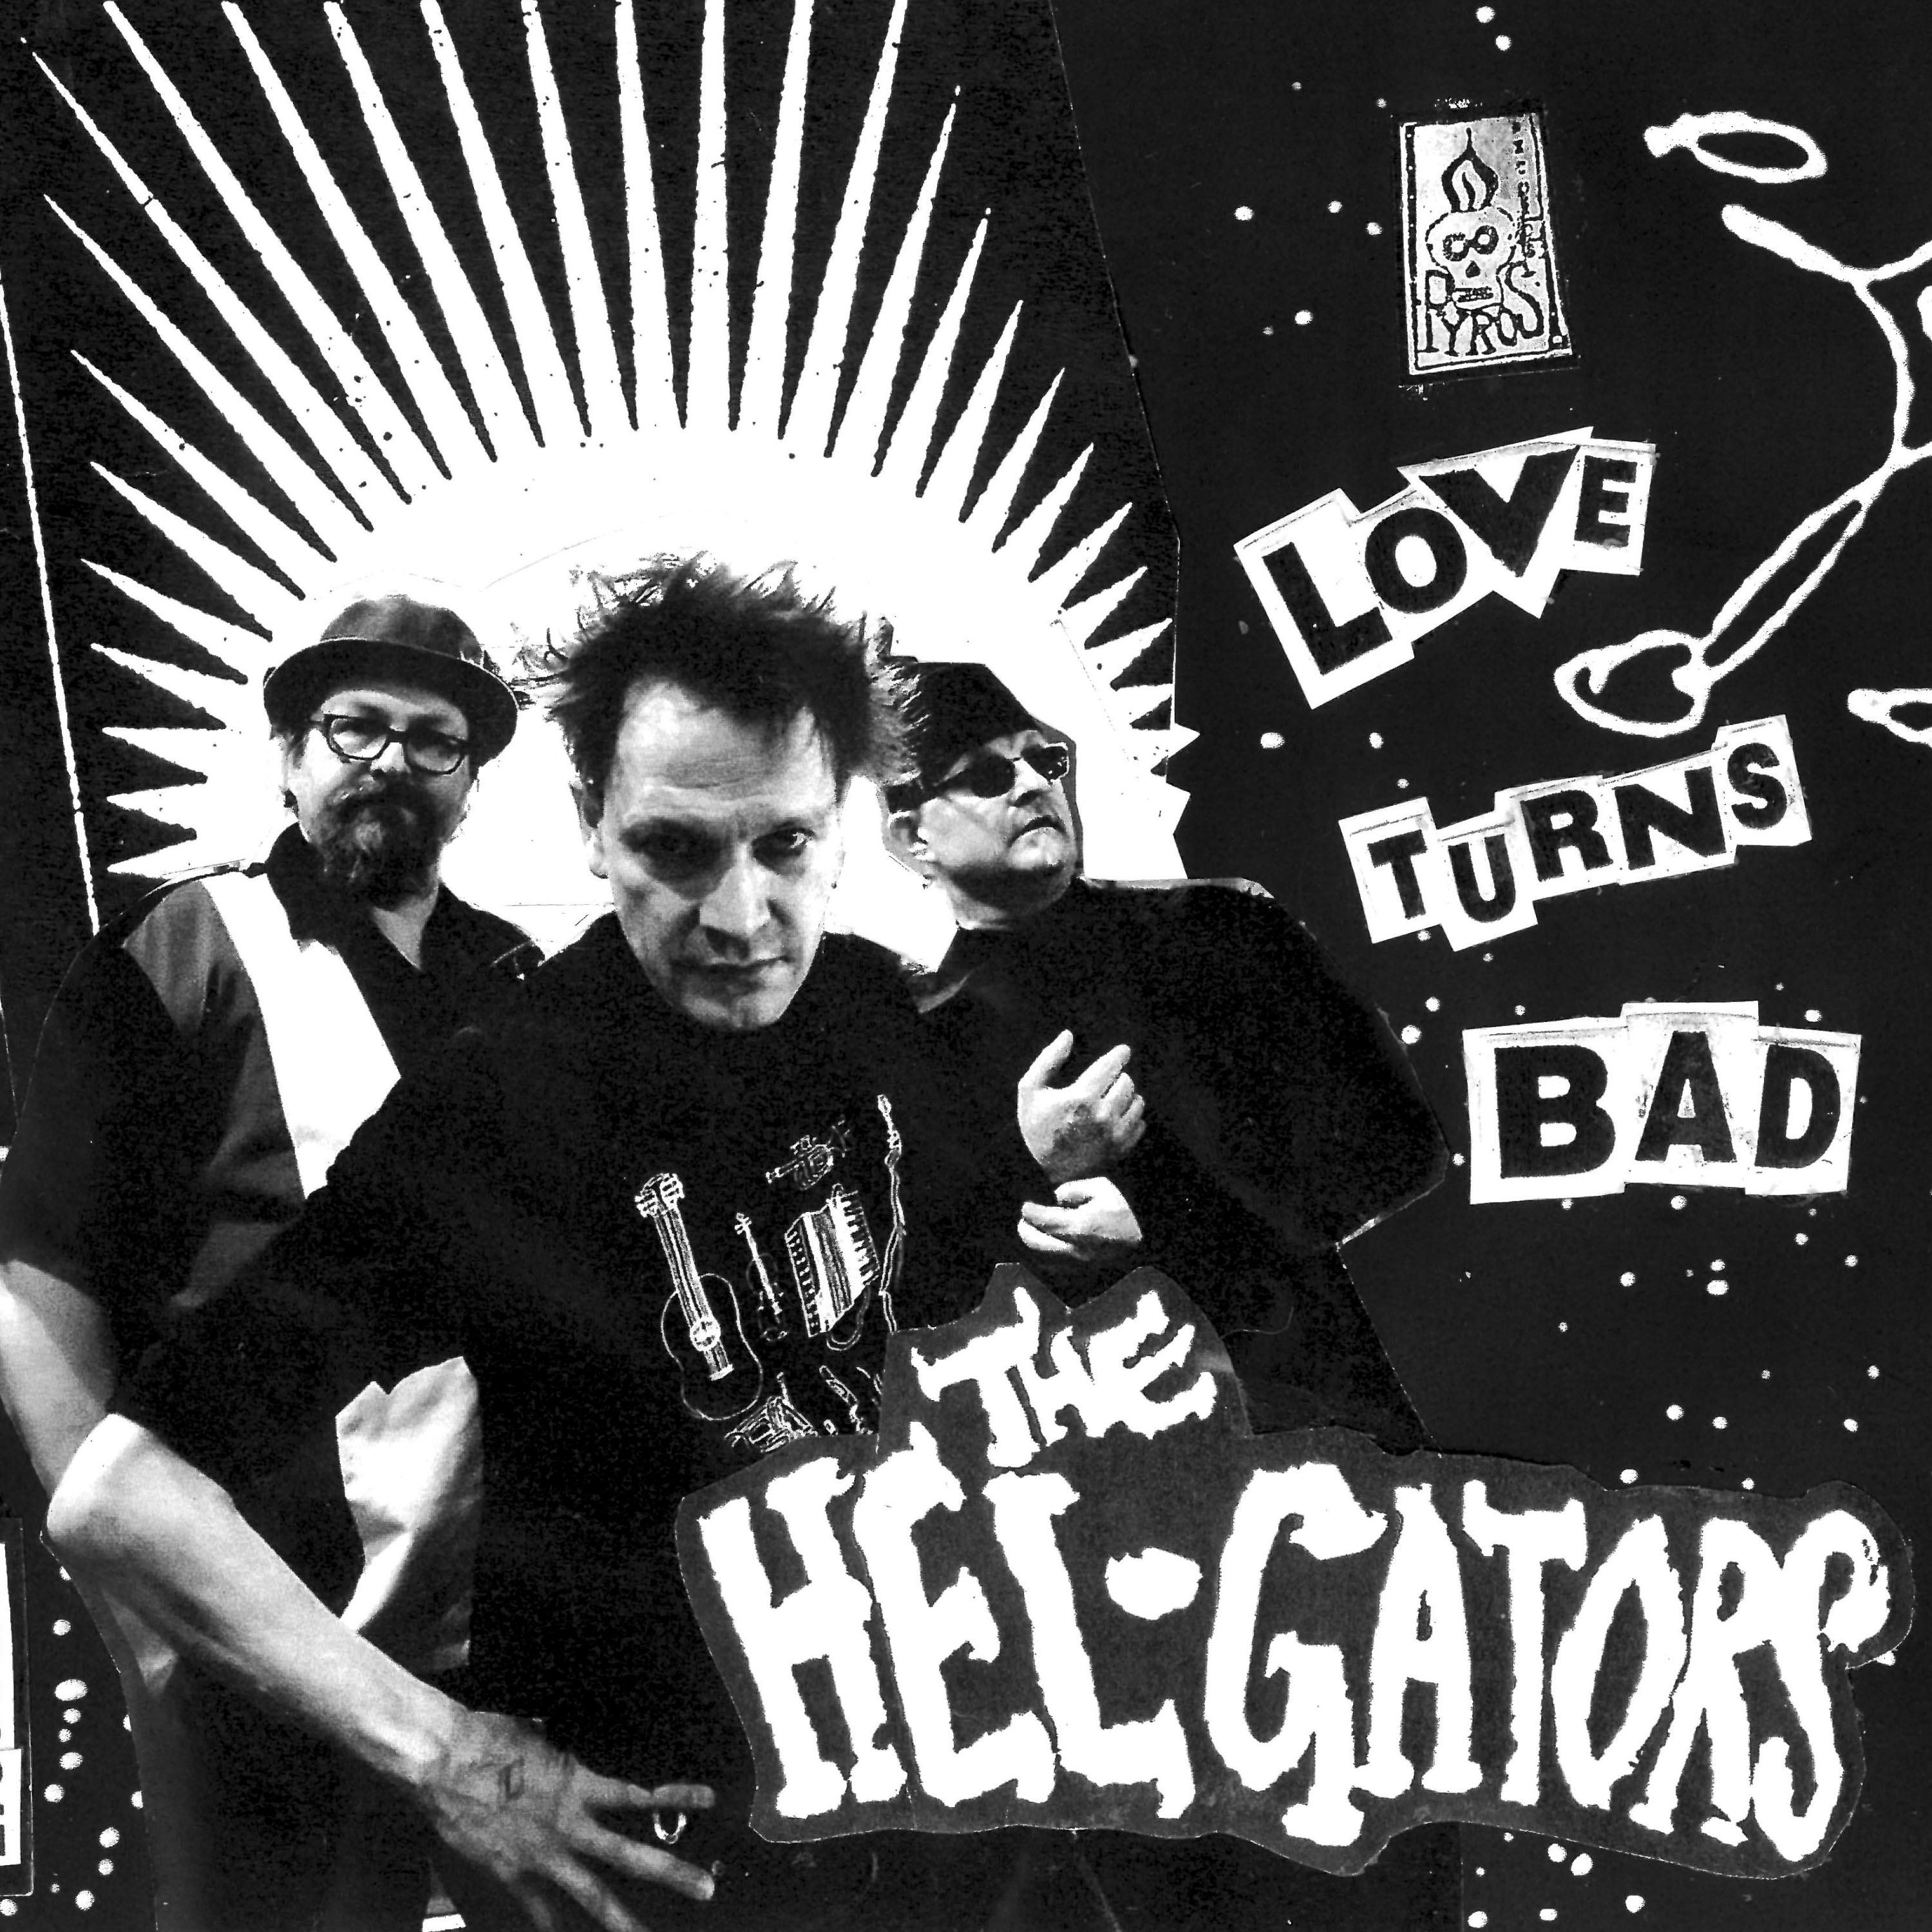 The Hel-Gators - Love Turns Bad - CD